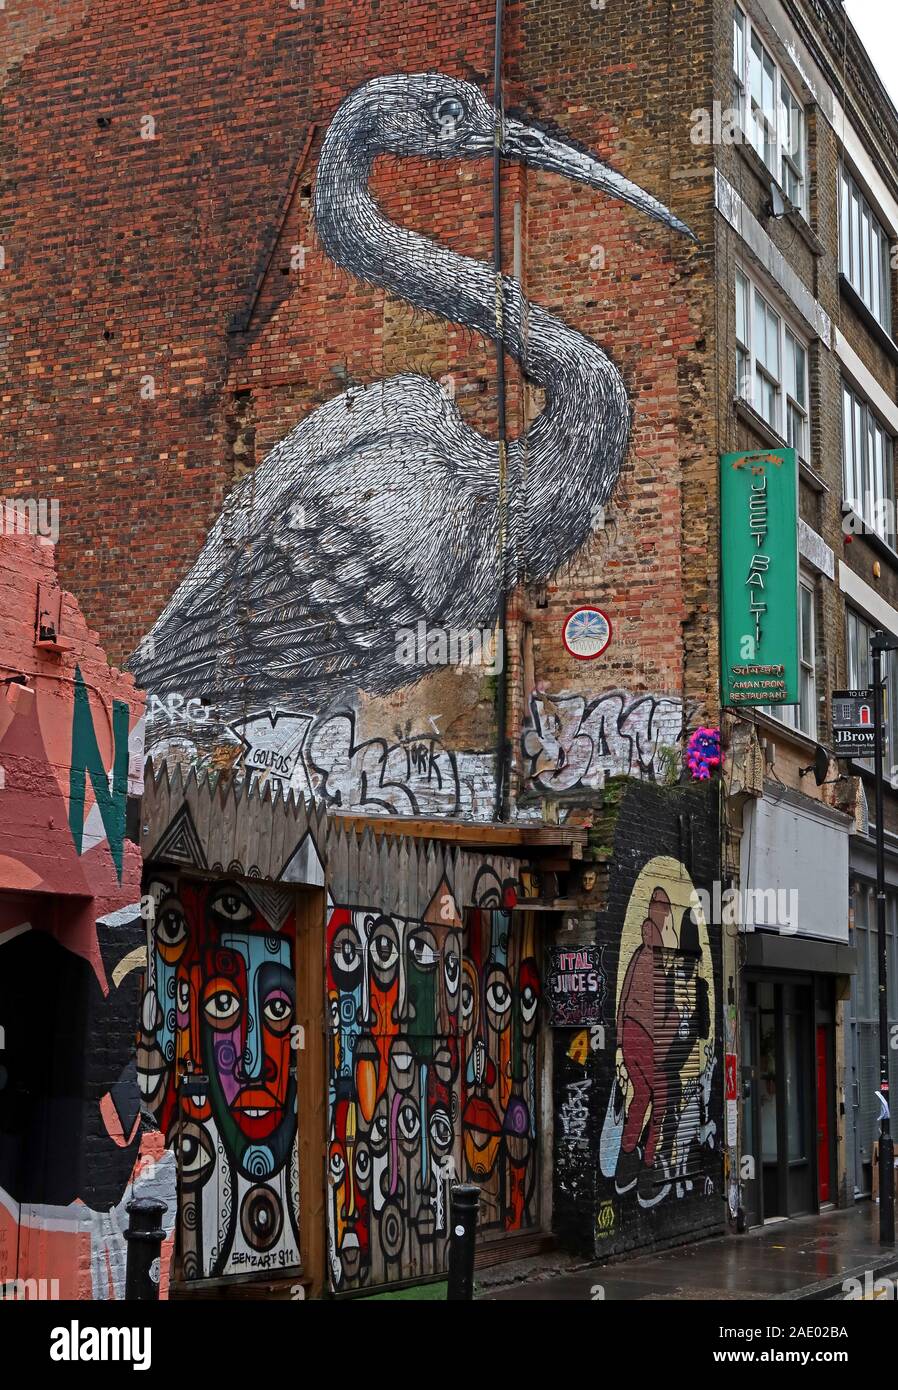 Stork on wall,Brick Lane,art and graffiti,Shoreditch,Tower Hamlets,East End,London,South East,England,UK, E1 6QL Stock Photo